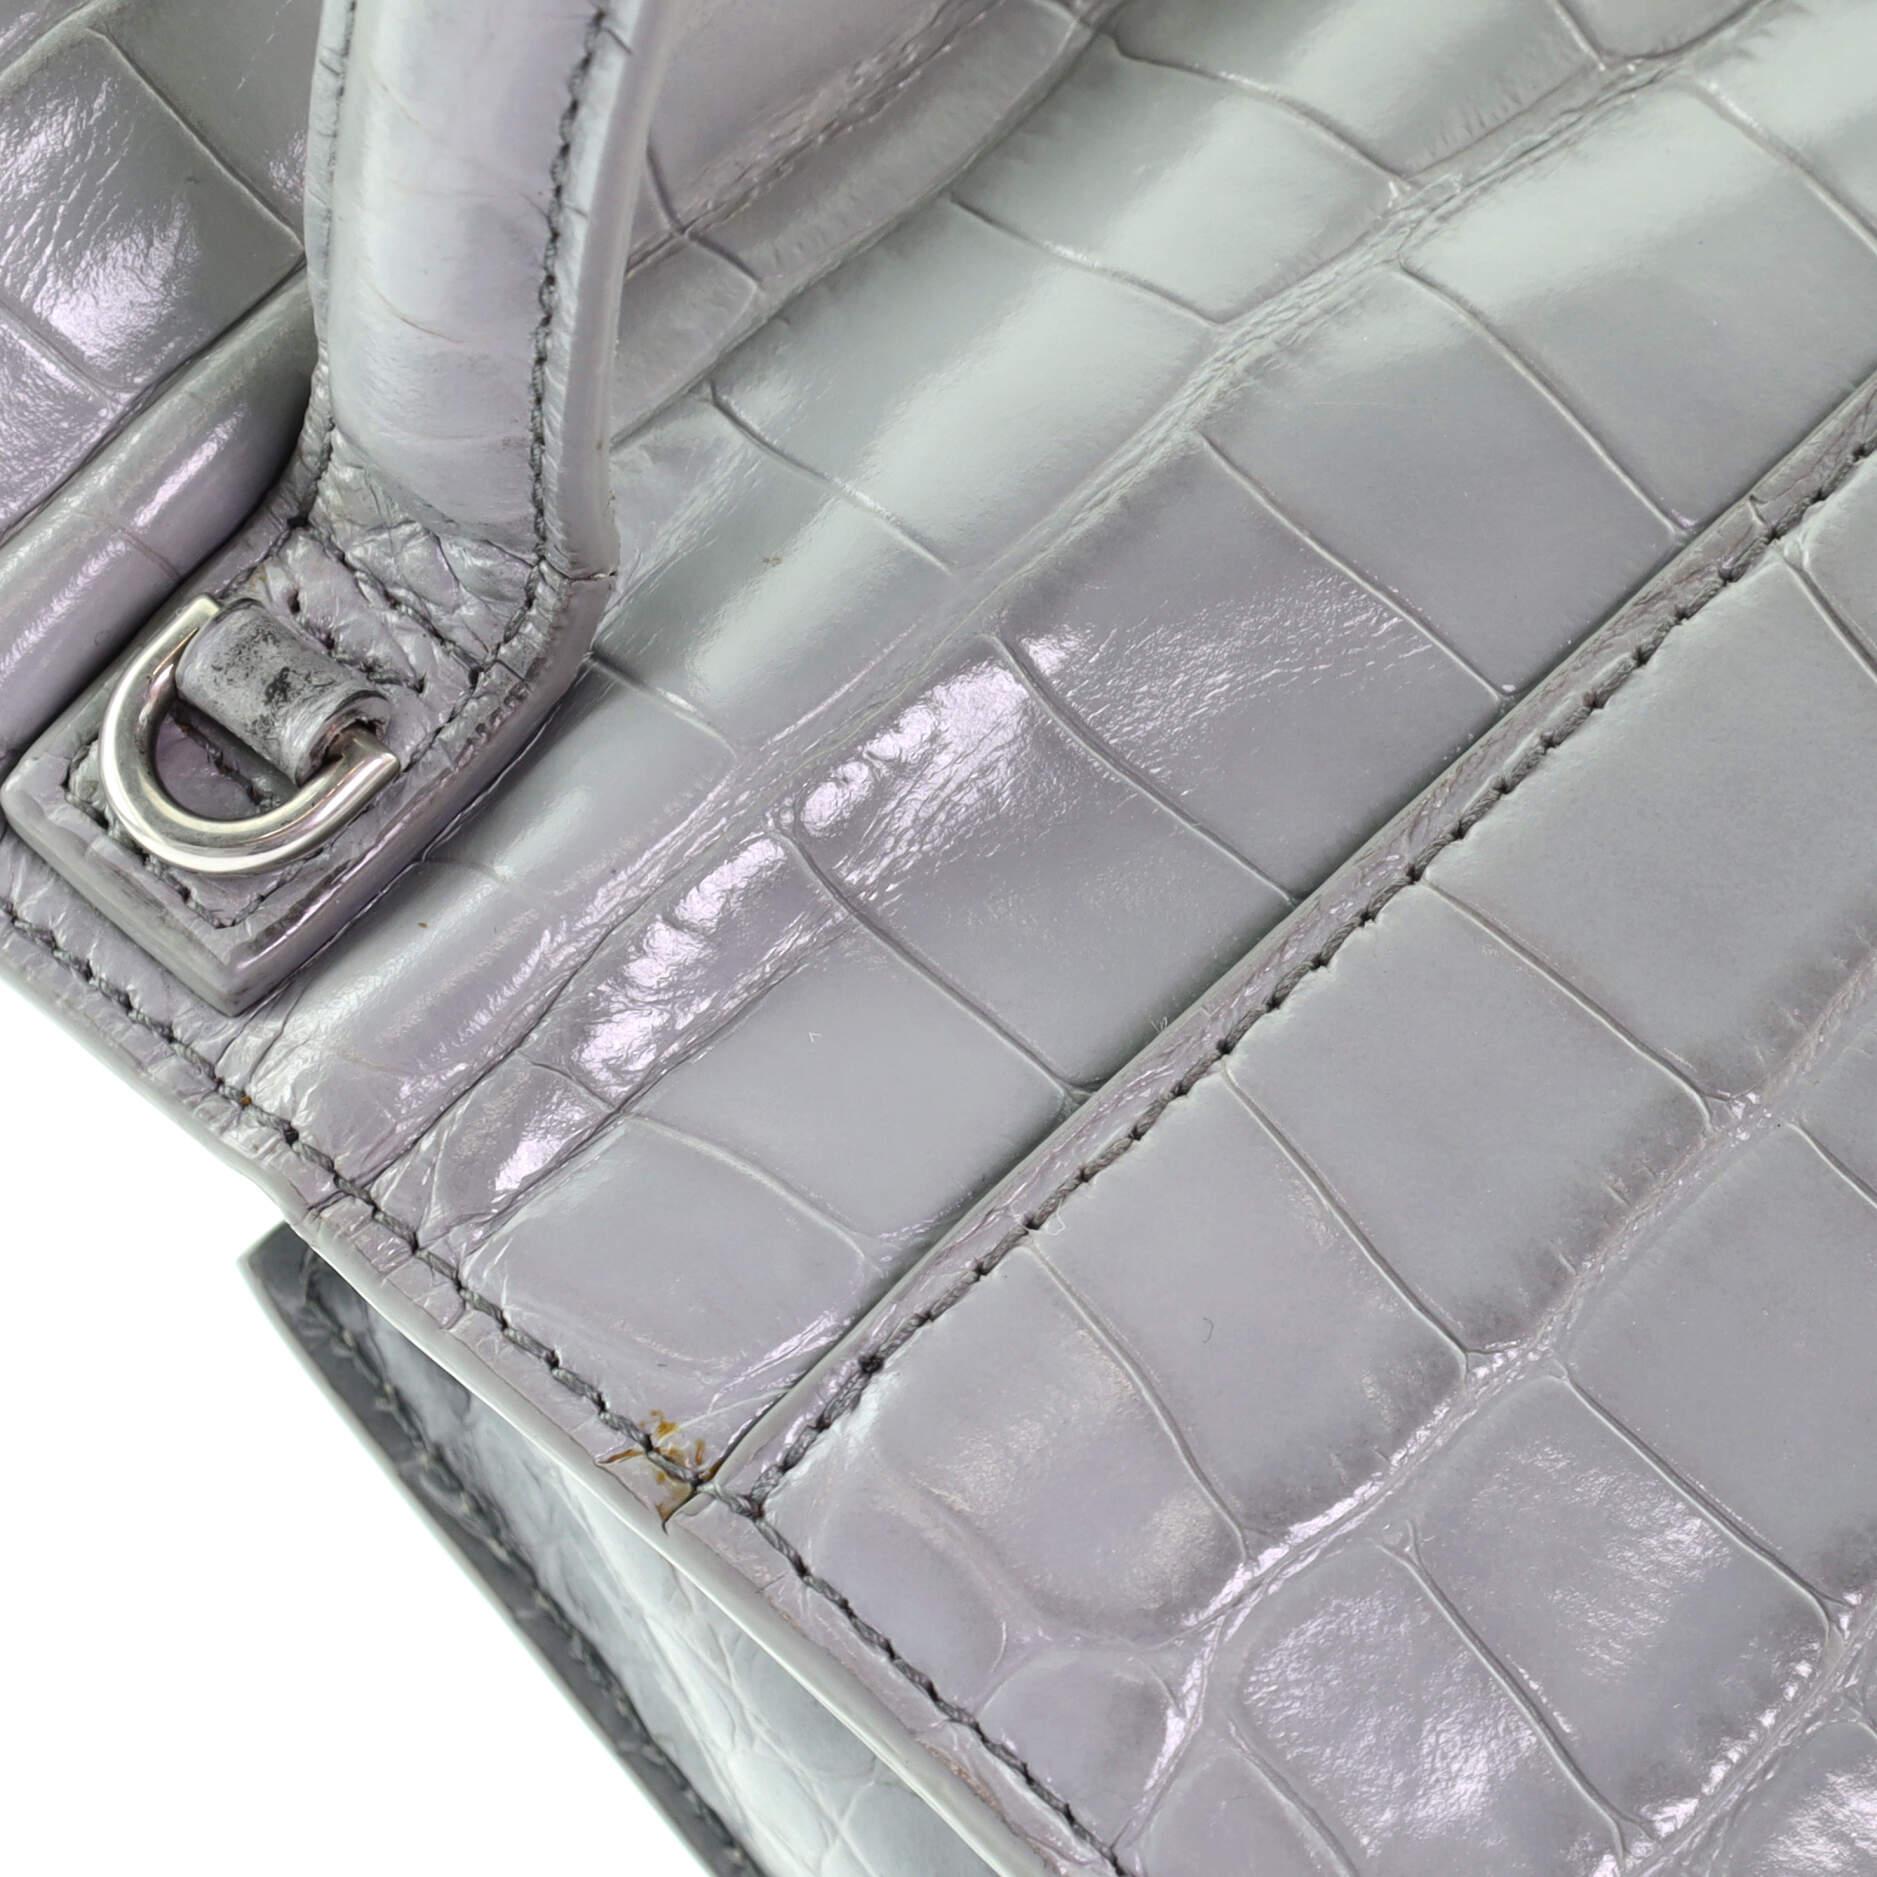 Balenciaga Sharp Top Handle Bag Crocodile Embossed Leather XS 1